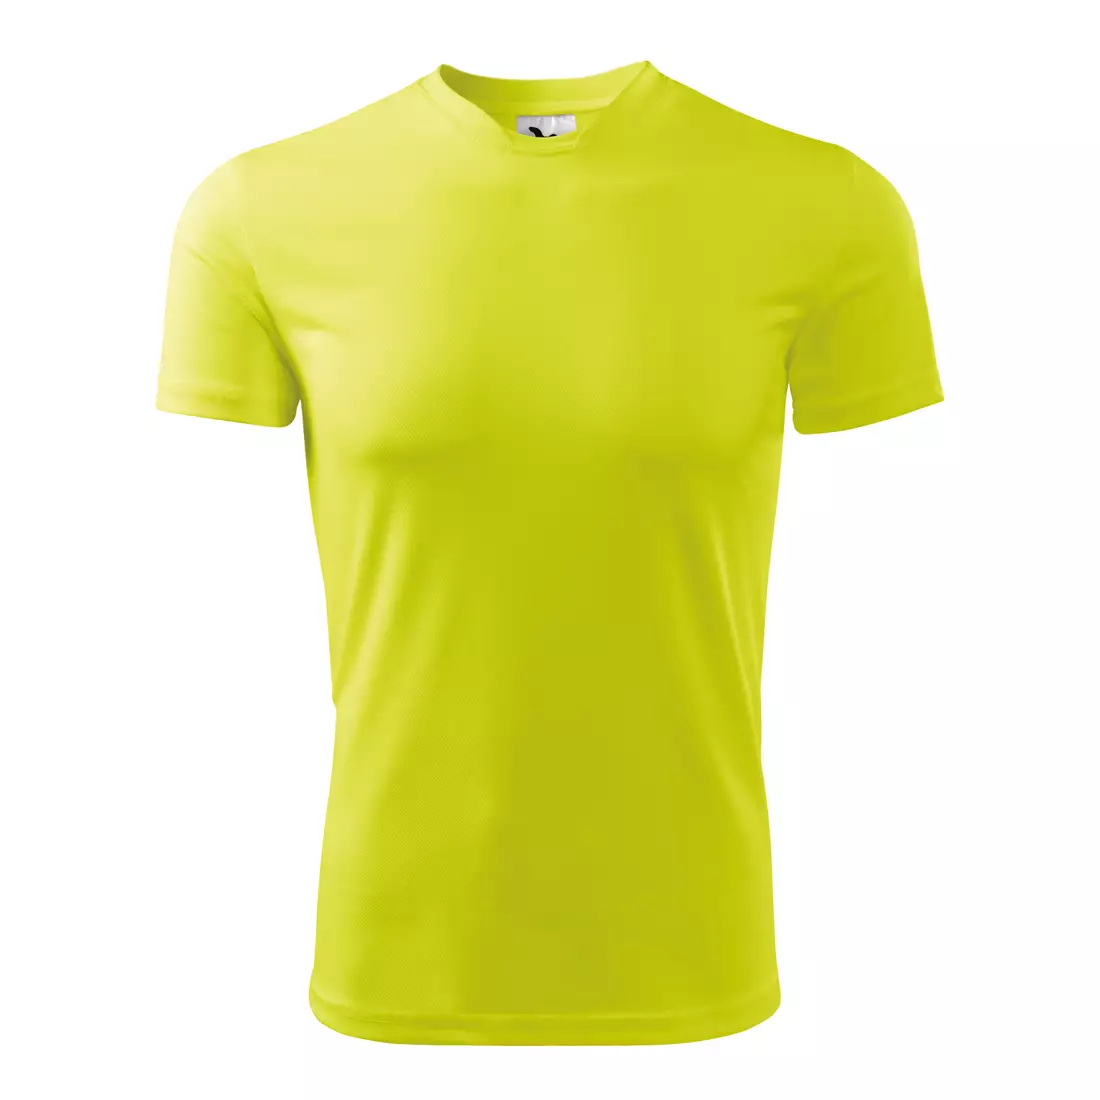 MALFINI FANTASY - Men's Sports T-Shirt 100% Polyester, Neon Yellow 1249013-124